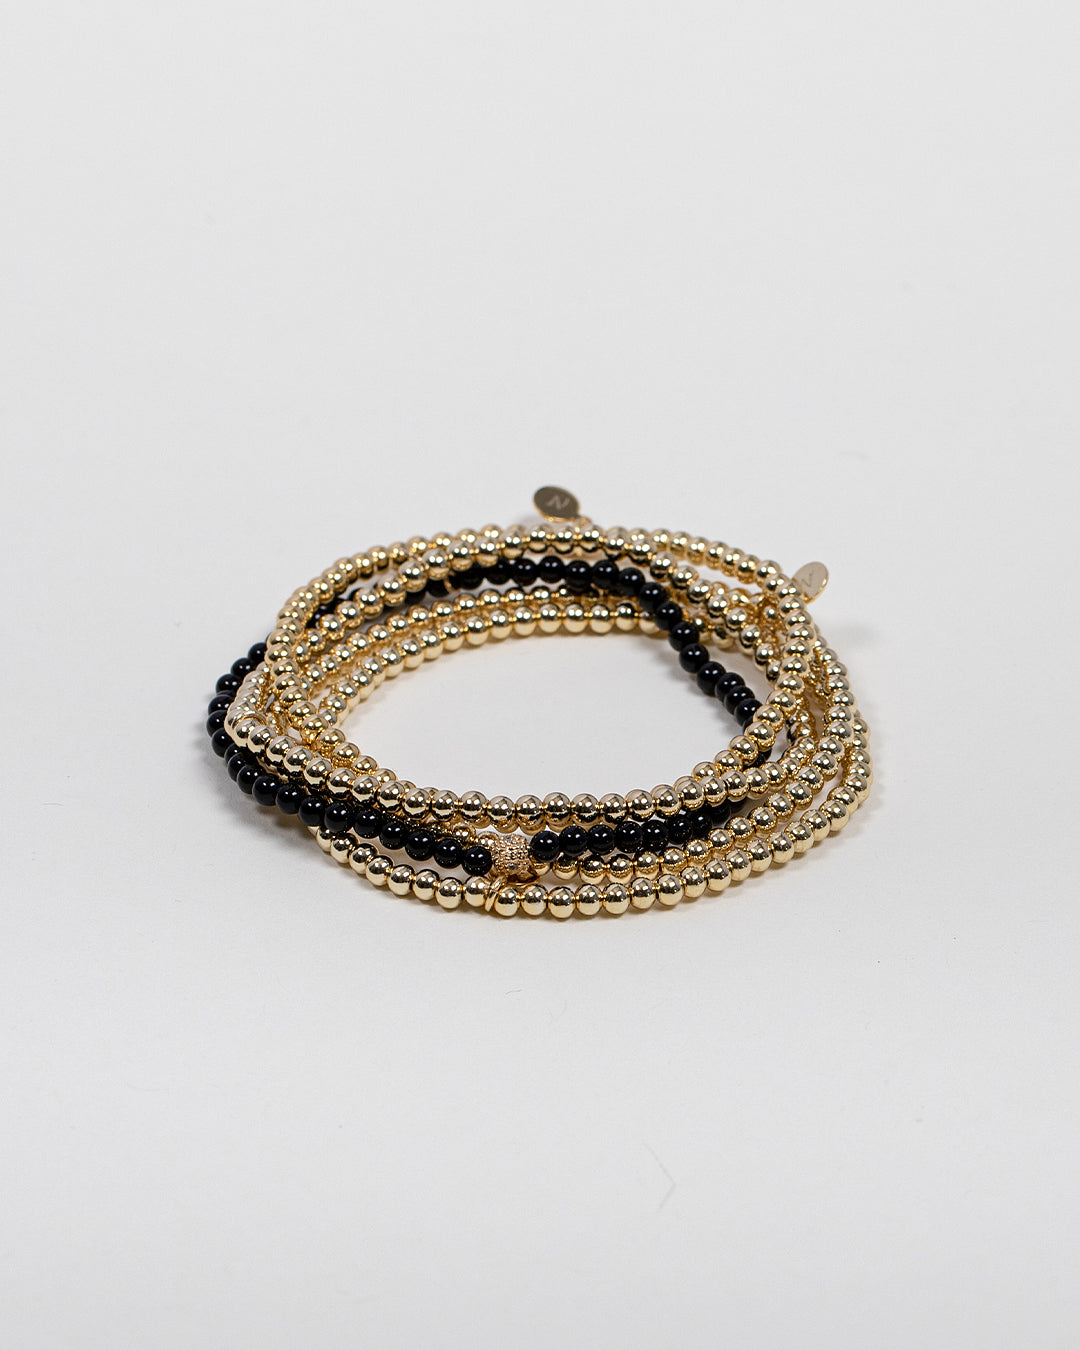 3mm Black Onyx Bead Bracelet with Diamond Bead